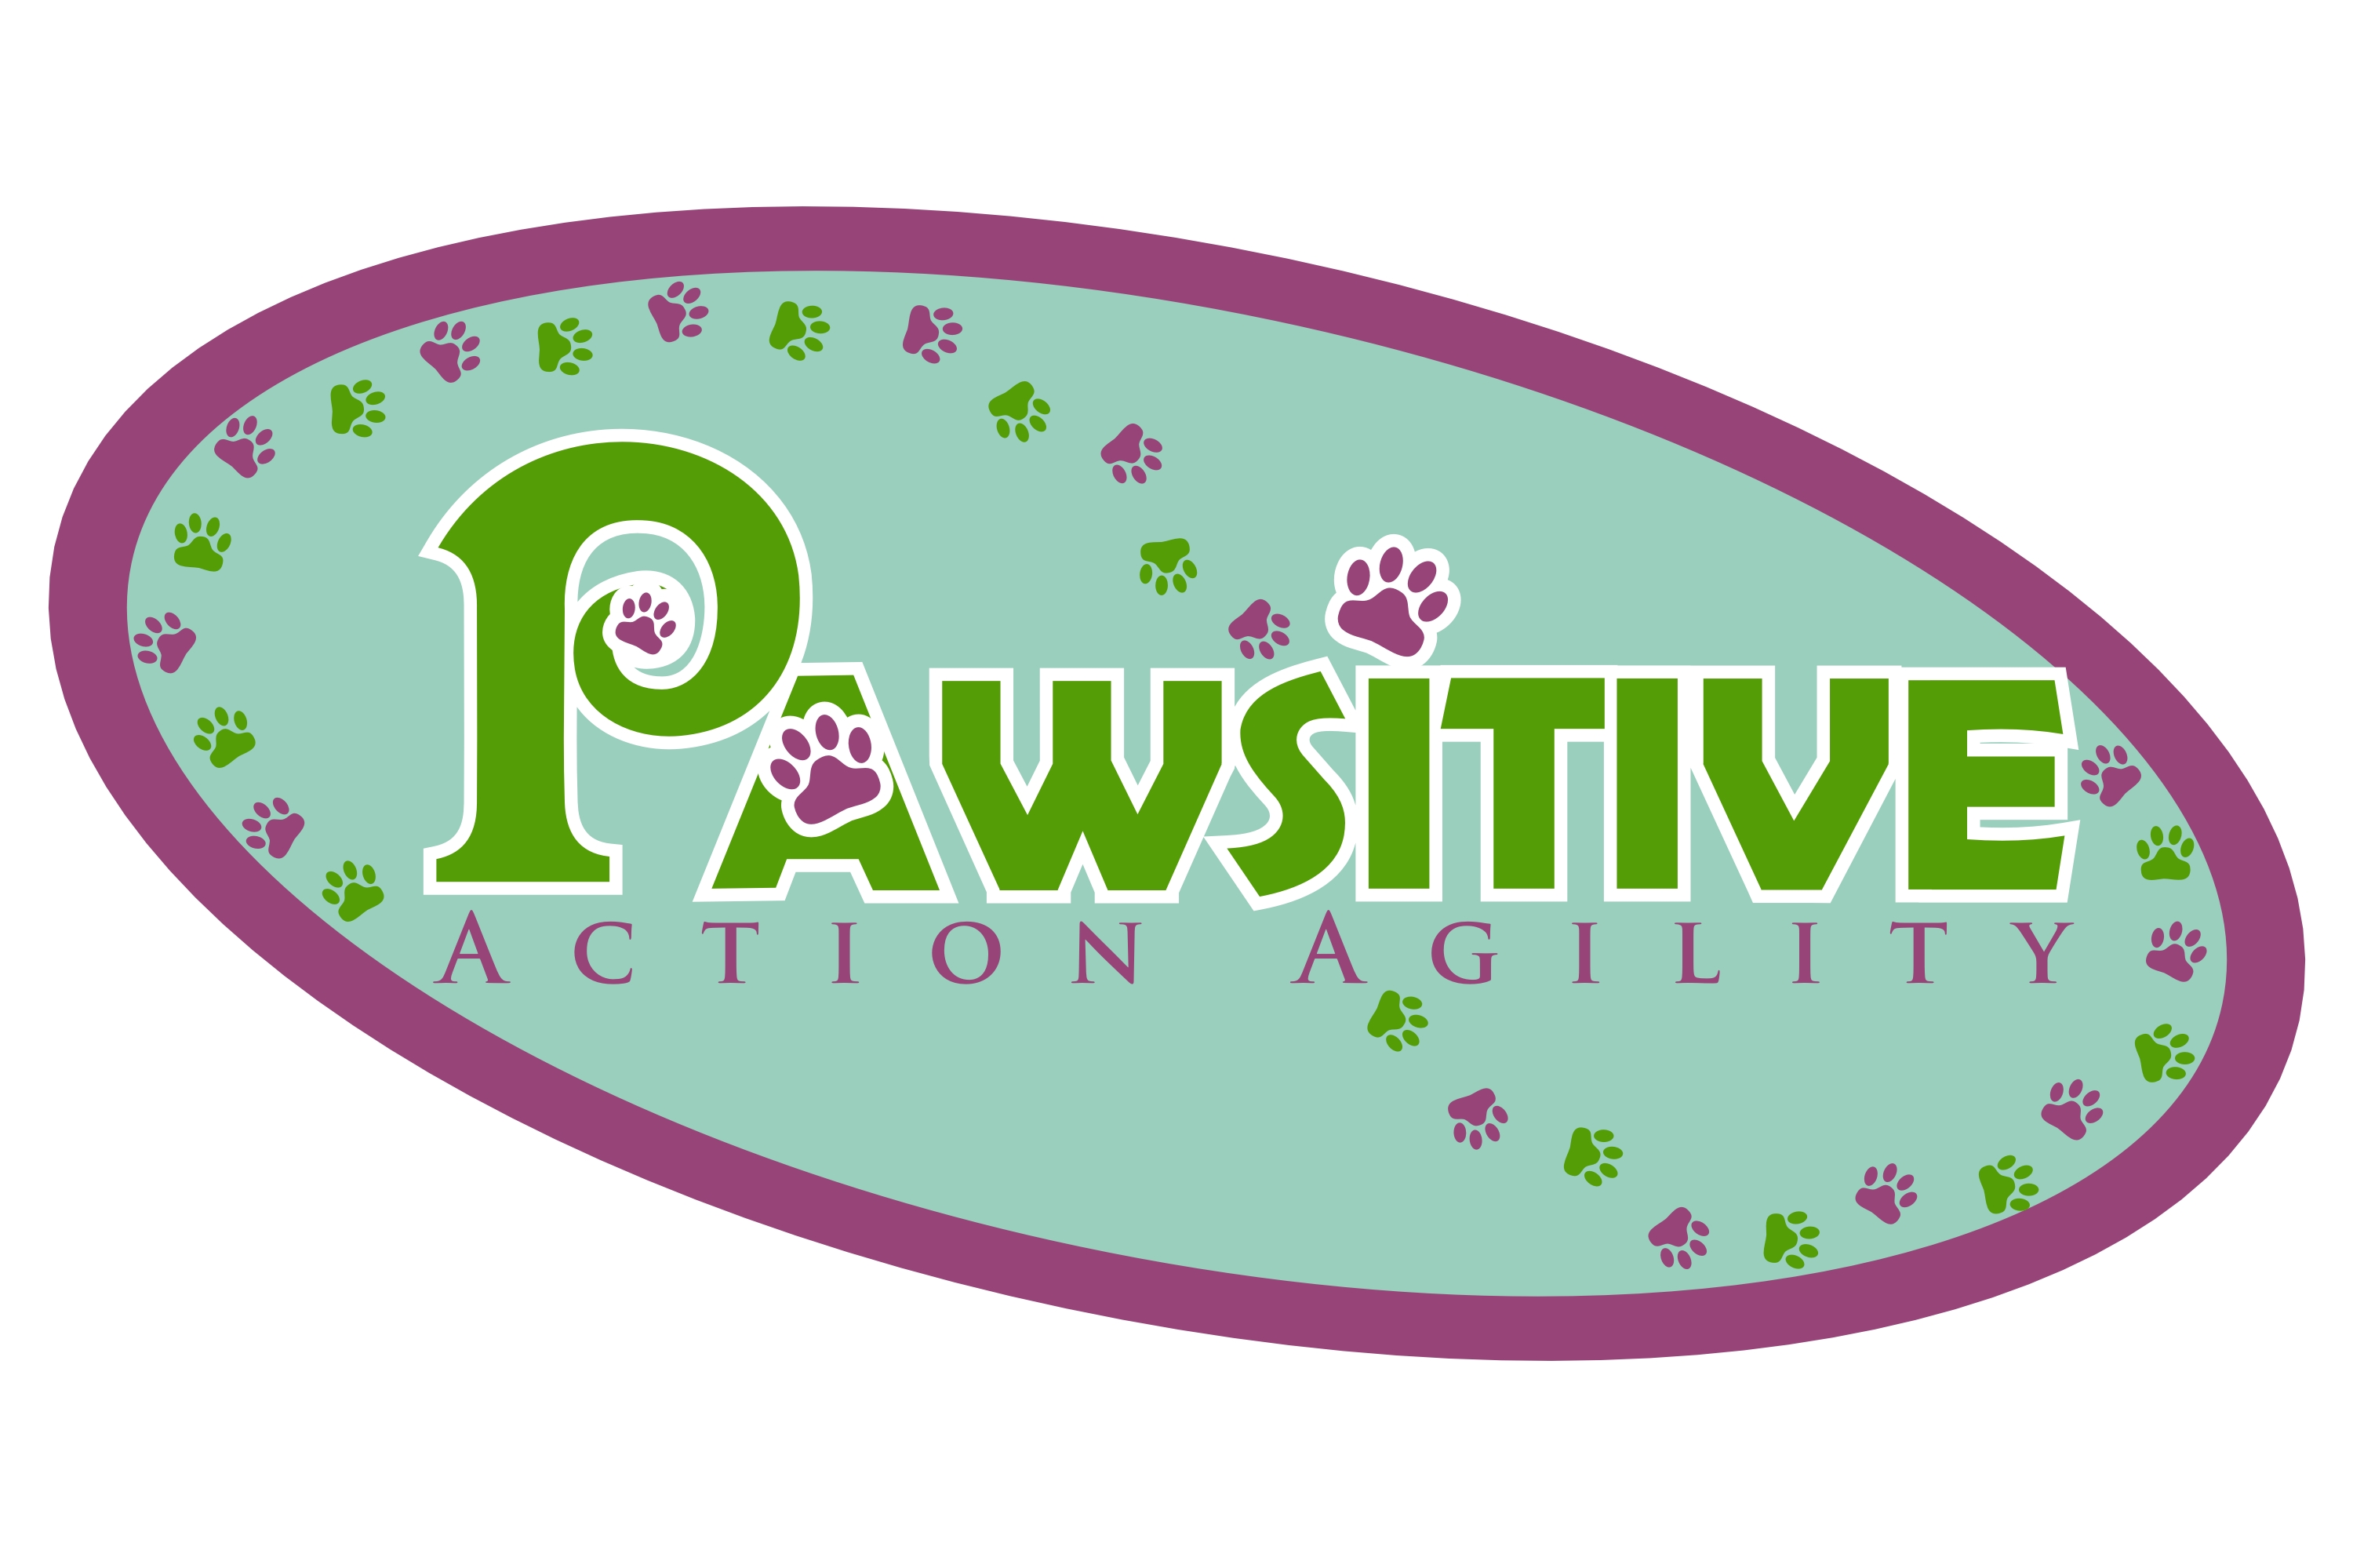 Pawsitive Action Agility